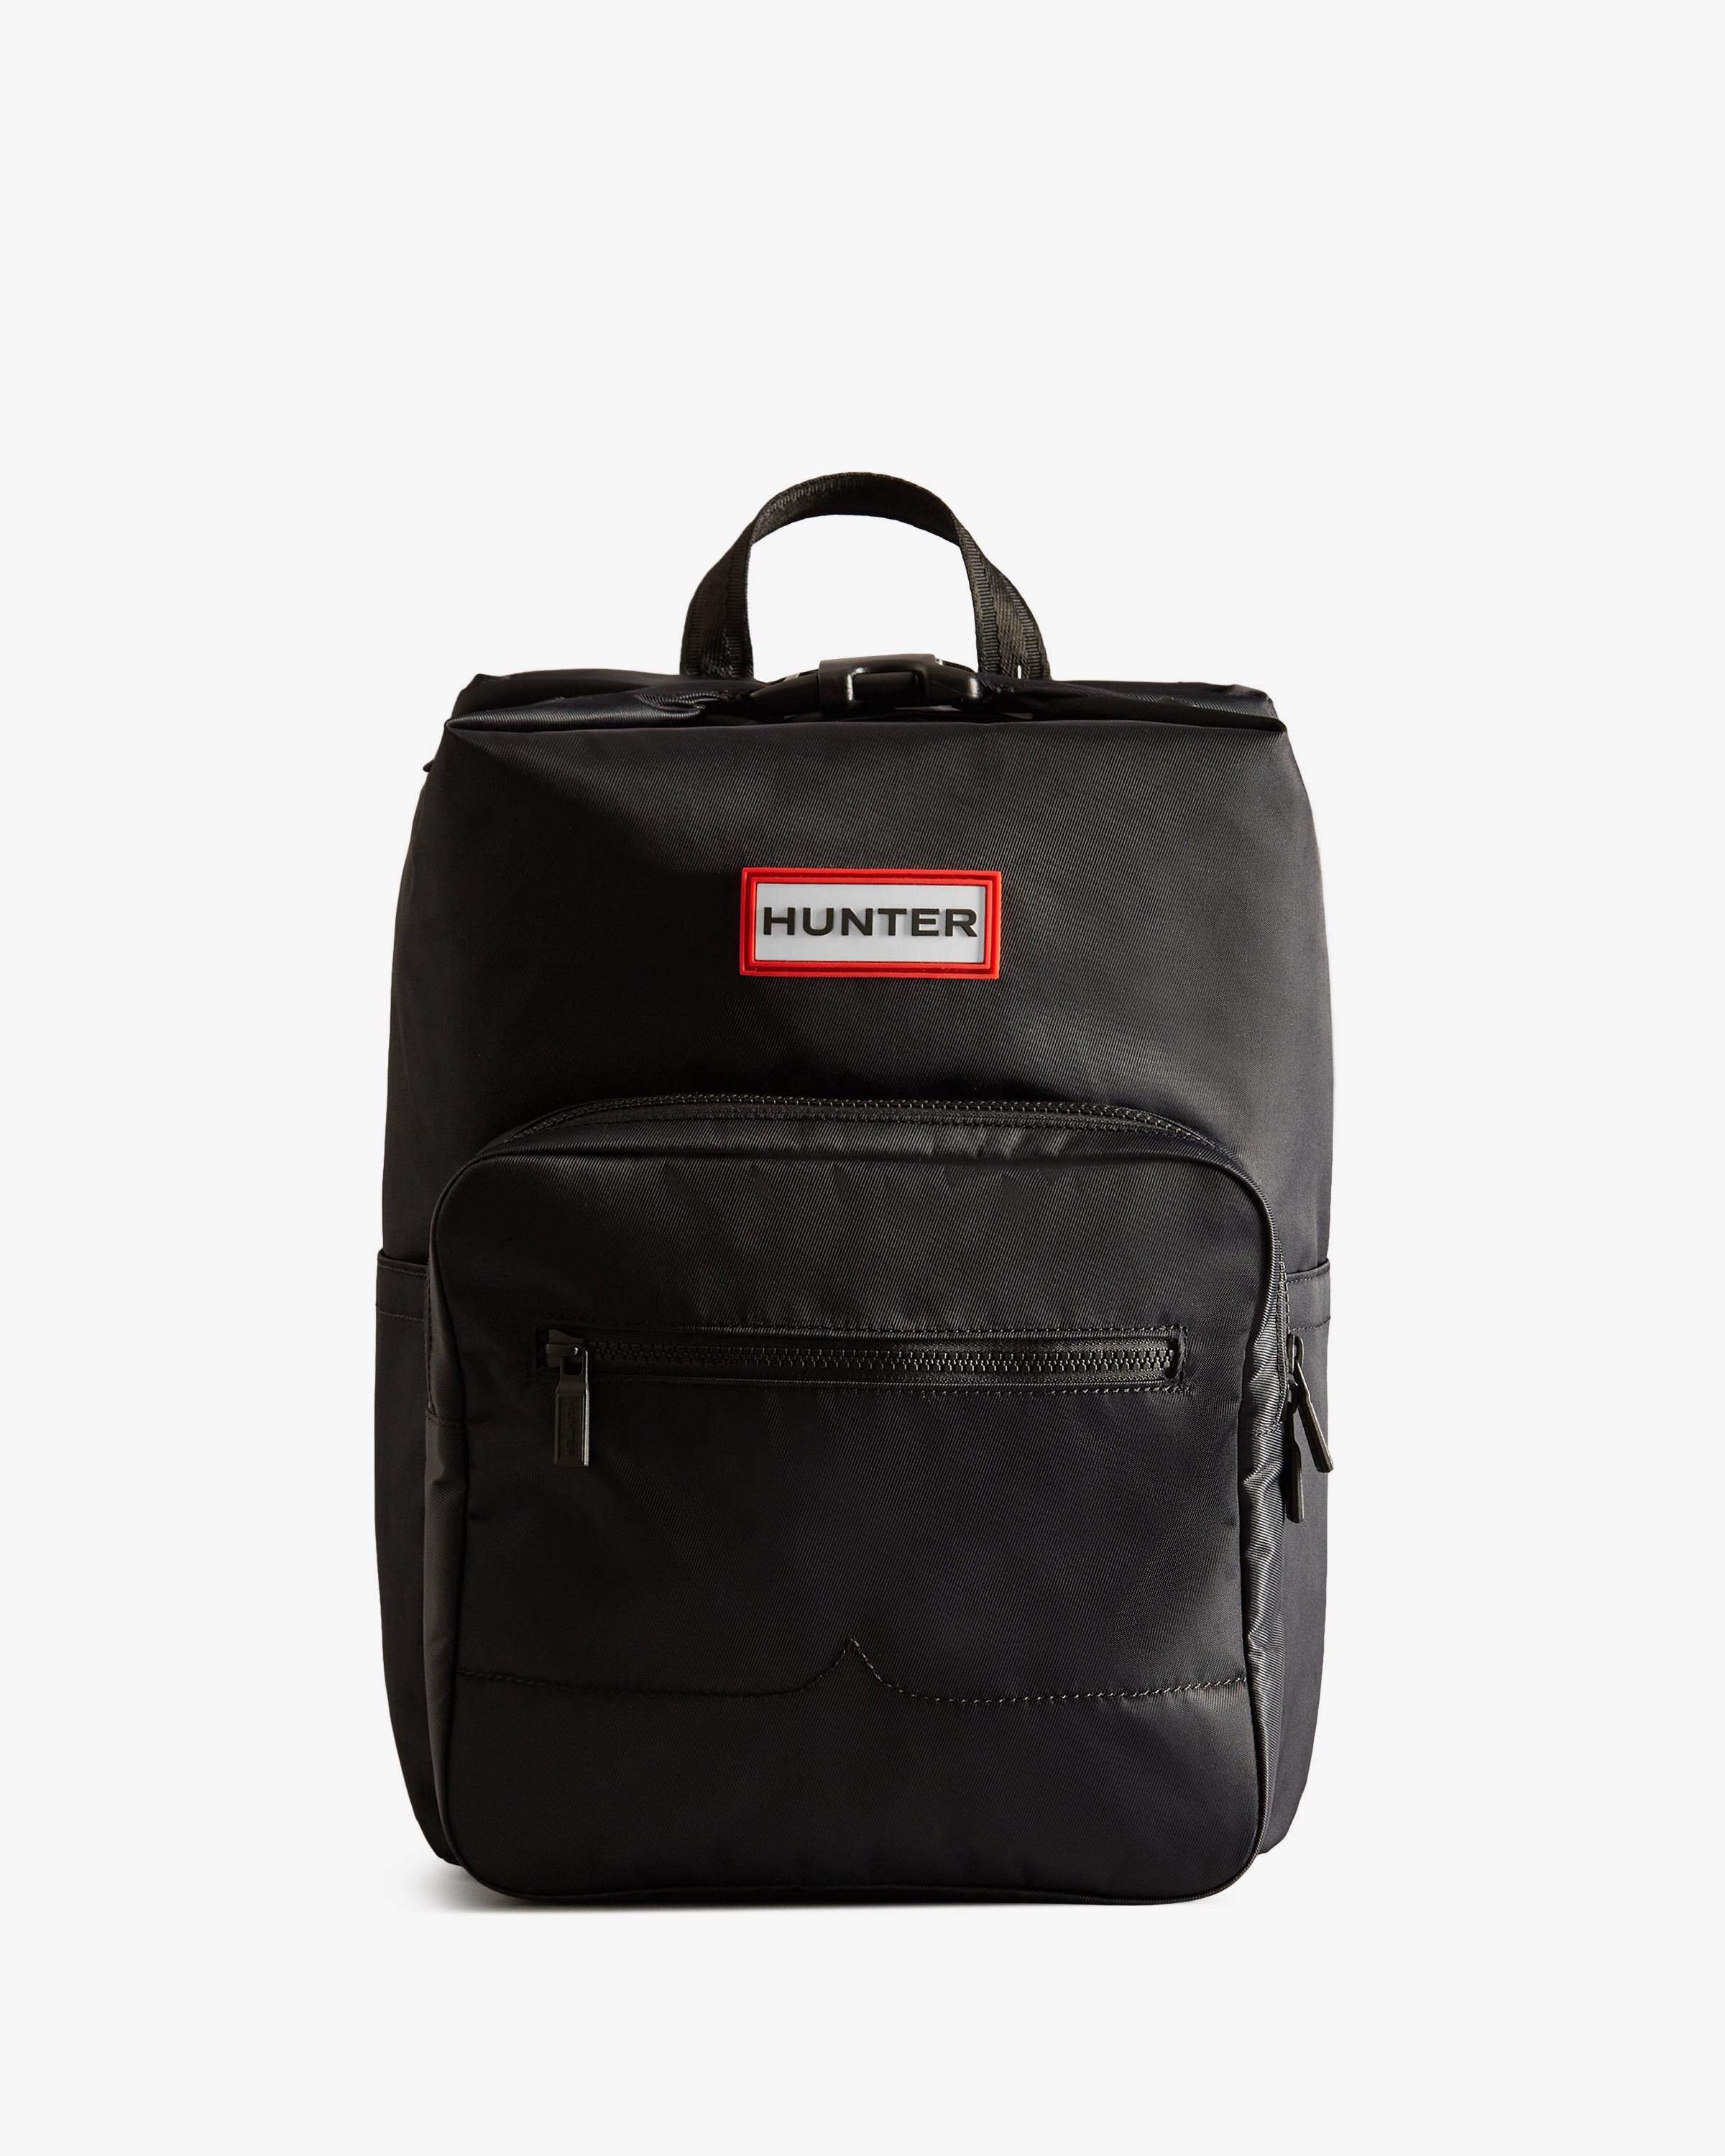 Backpacks | Hunter Boots UK